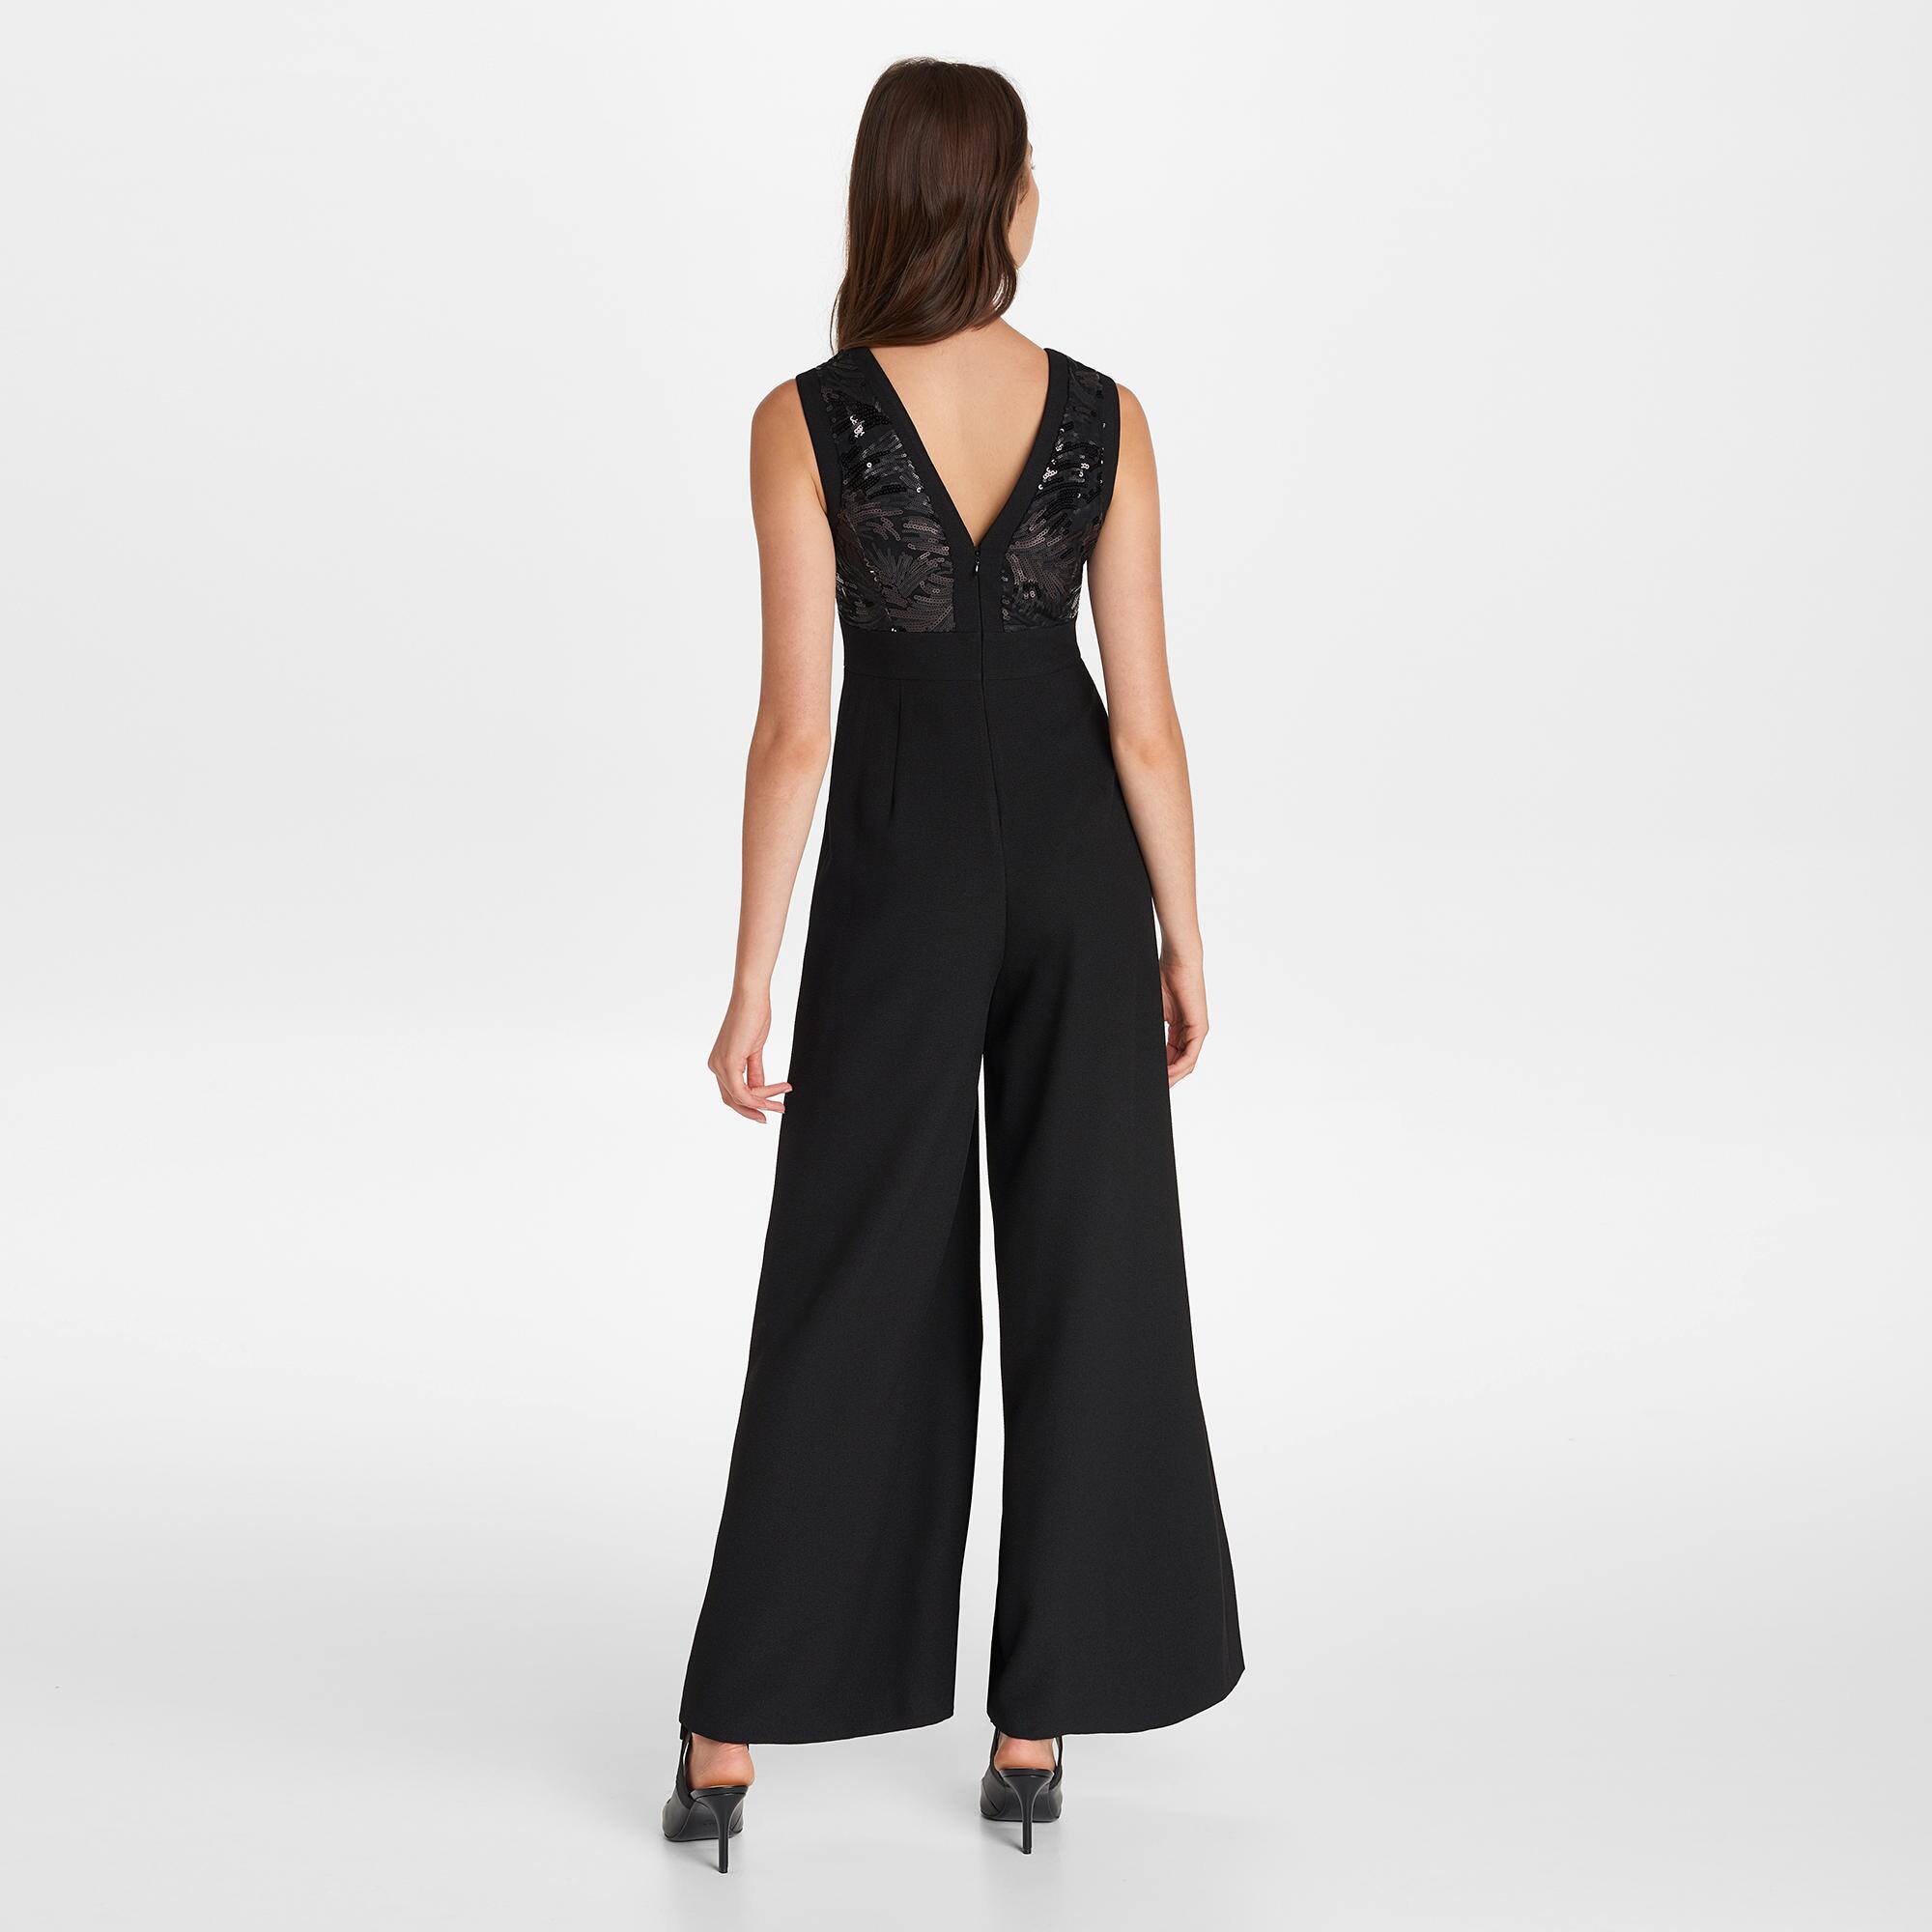 Karl Lagerfeld Synthetic Sleeveless V Neck Sequin Jumpsuit in Black - Lyst